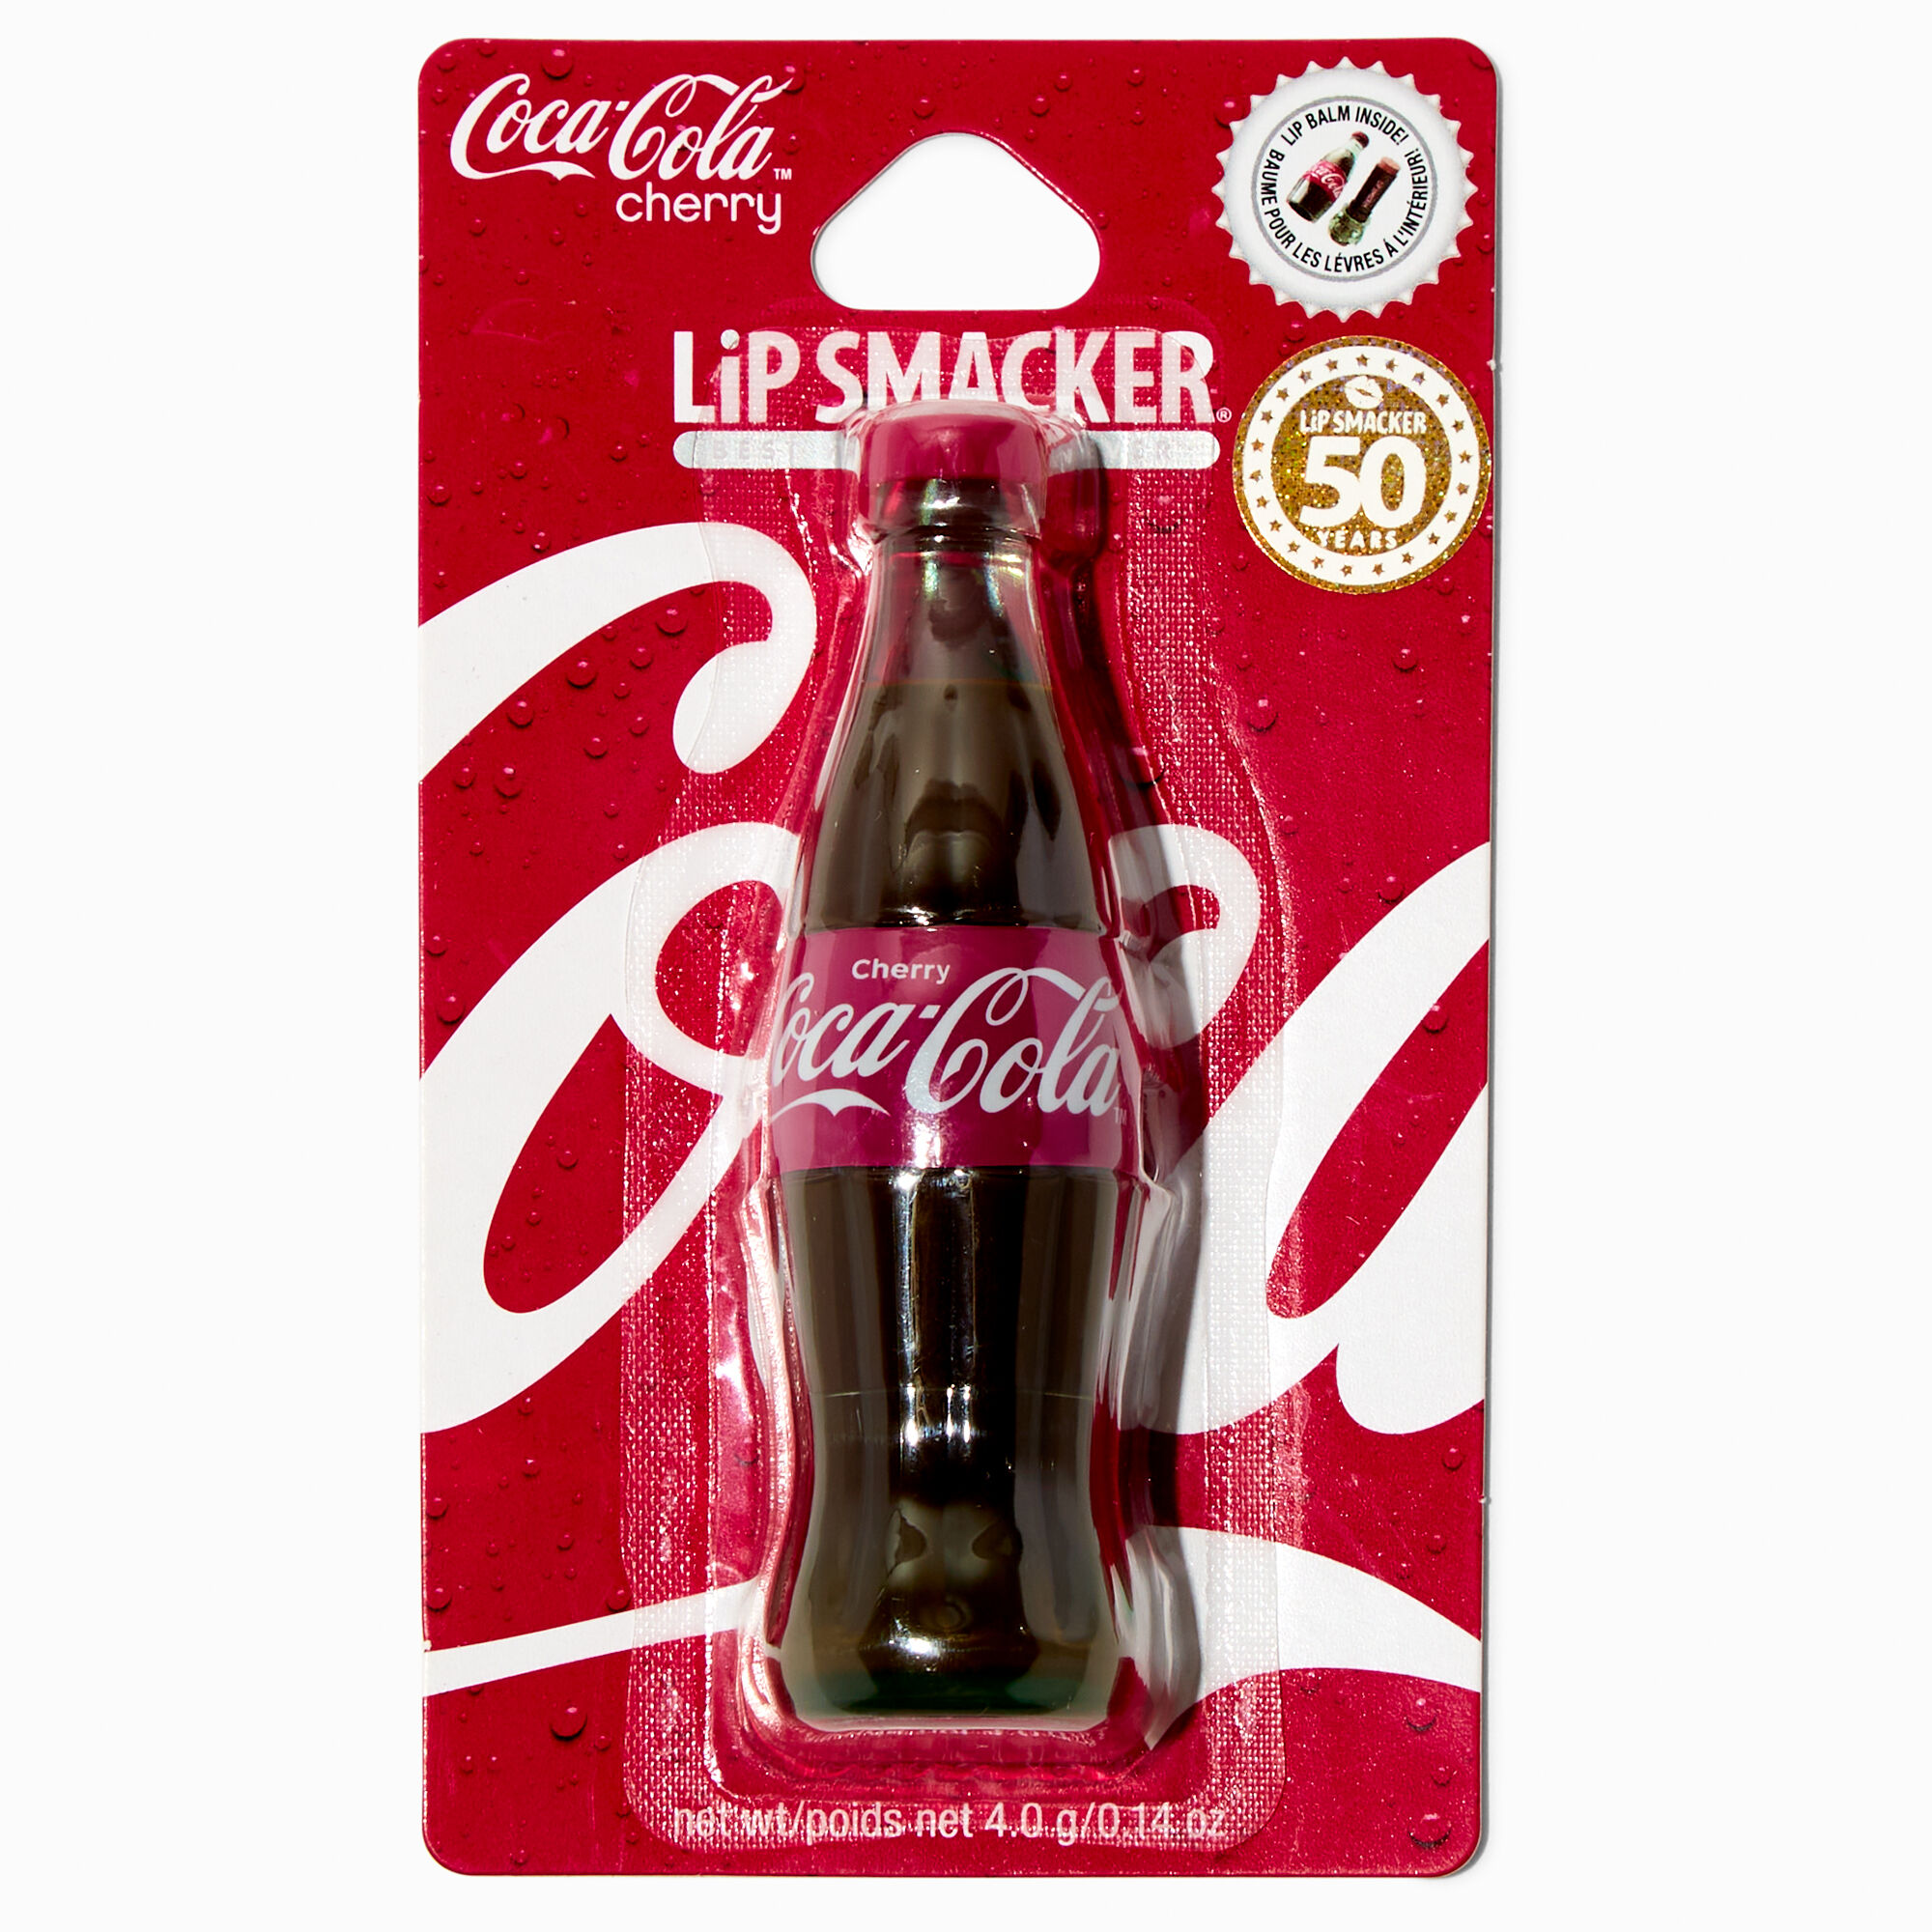 View Claires Lip Smacker CocaCola Cherry Bottle Balm information